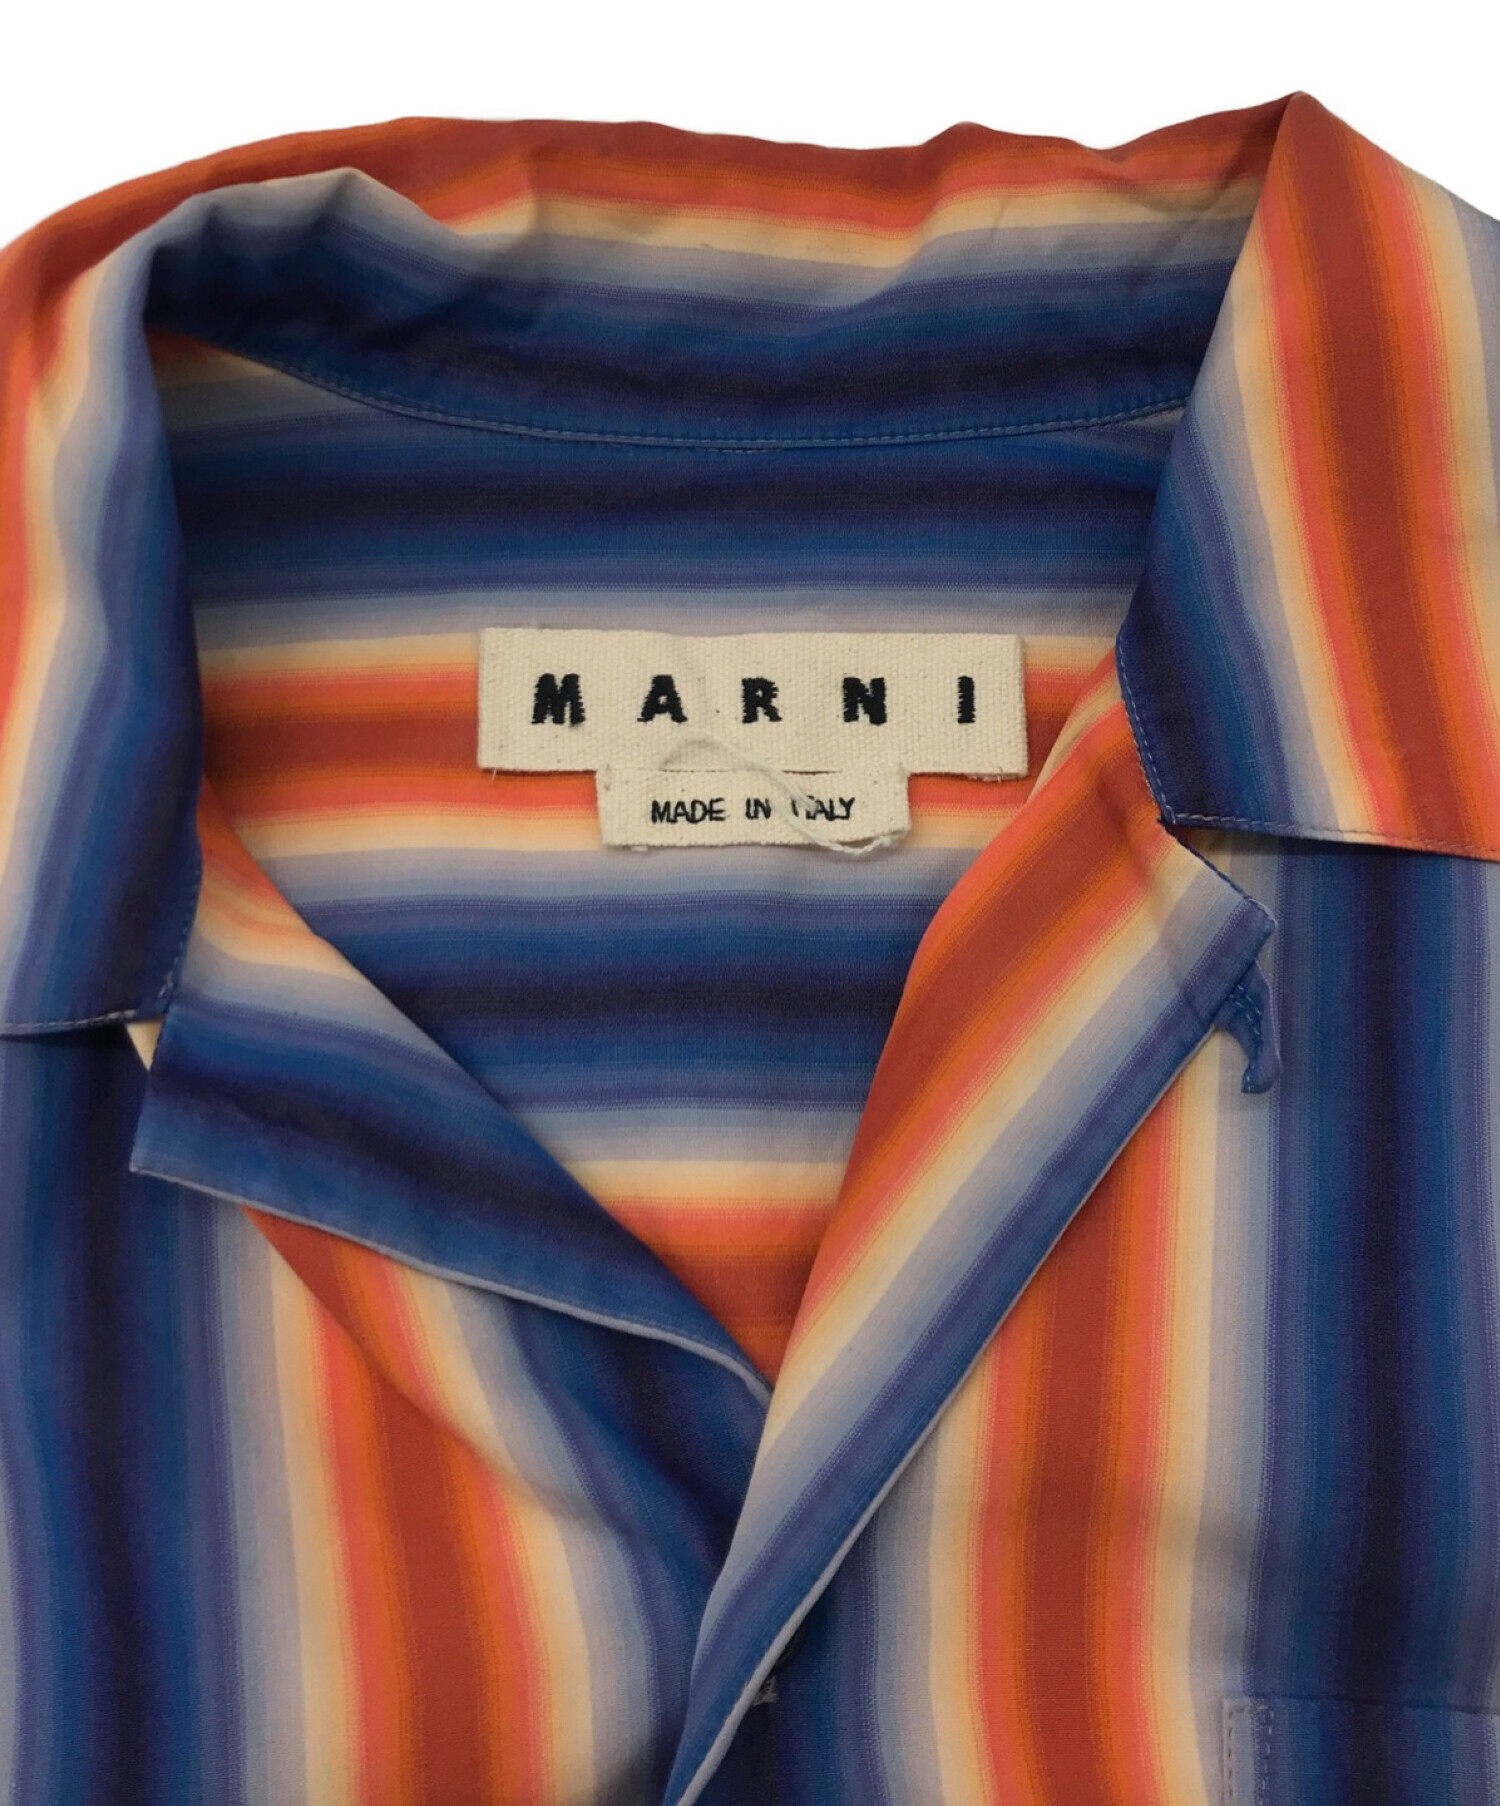 MARNI (マルニ) ストライプ オープンカラーシャツ オレンジ×ブルー サイズ:46